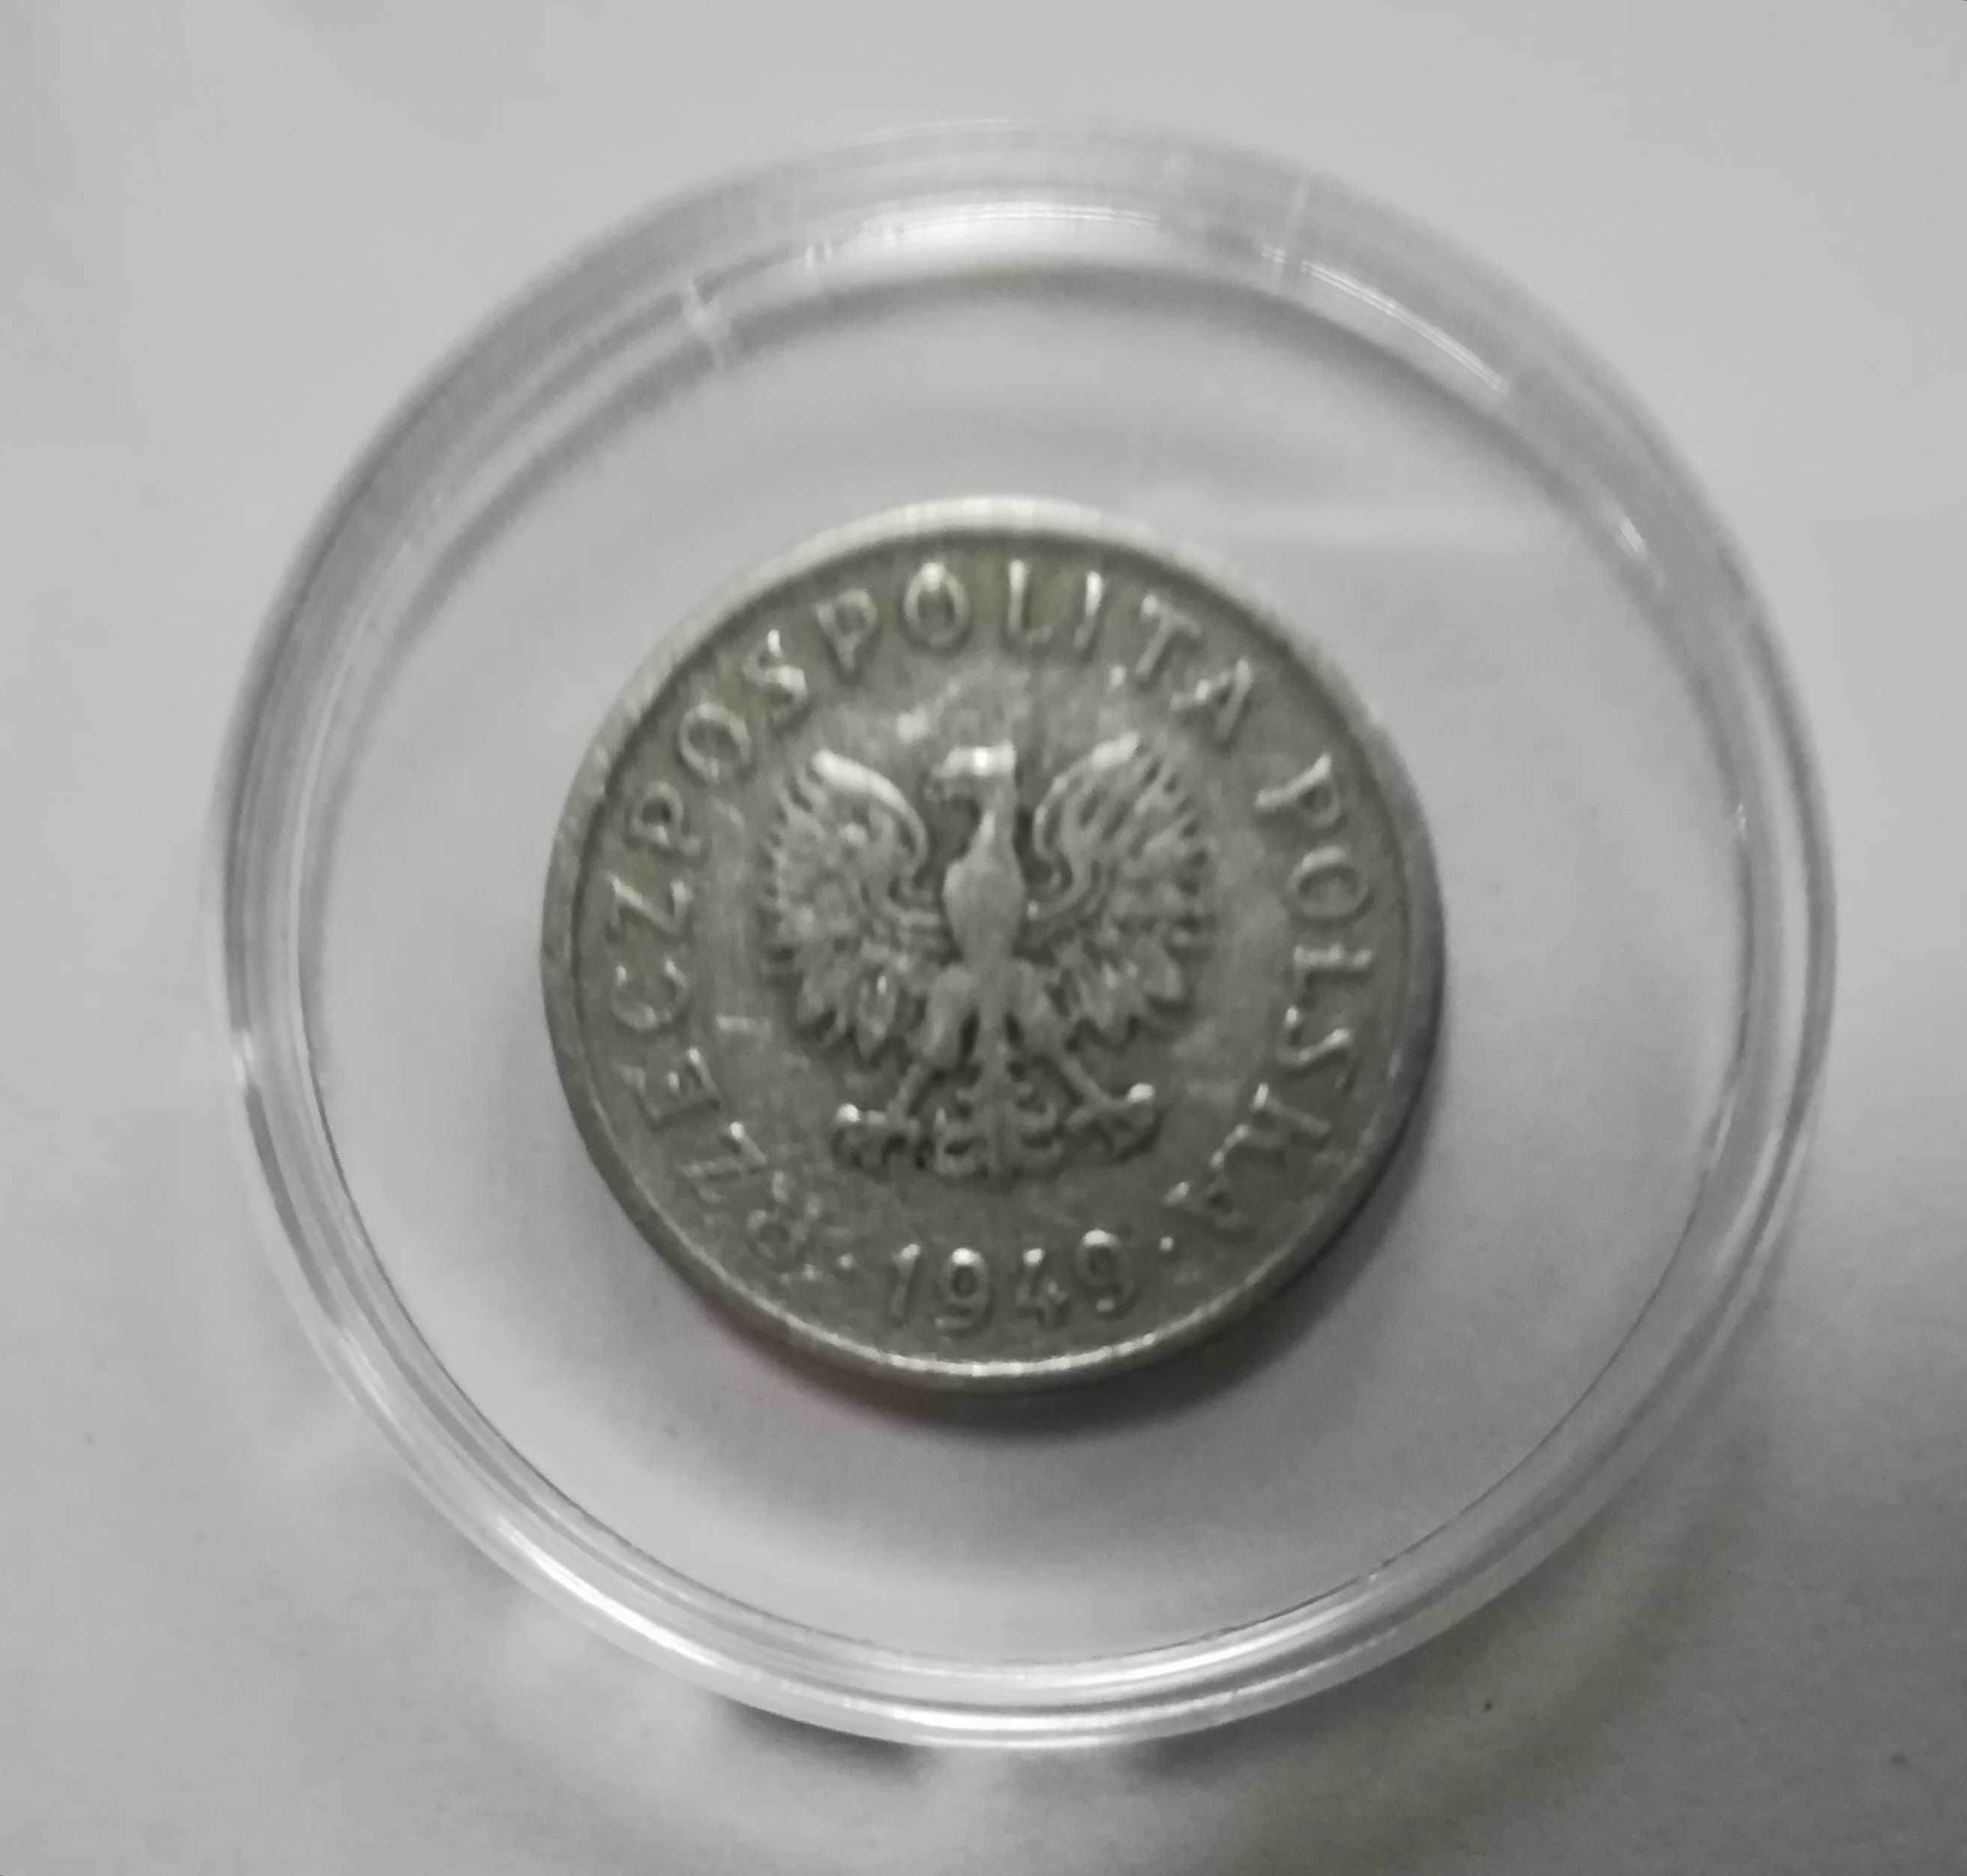 Moneta bez znaku mennicy 20 groszy 1949 rok .